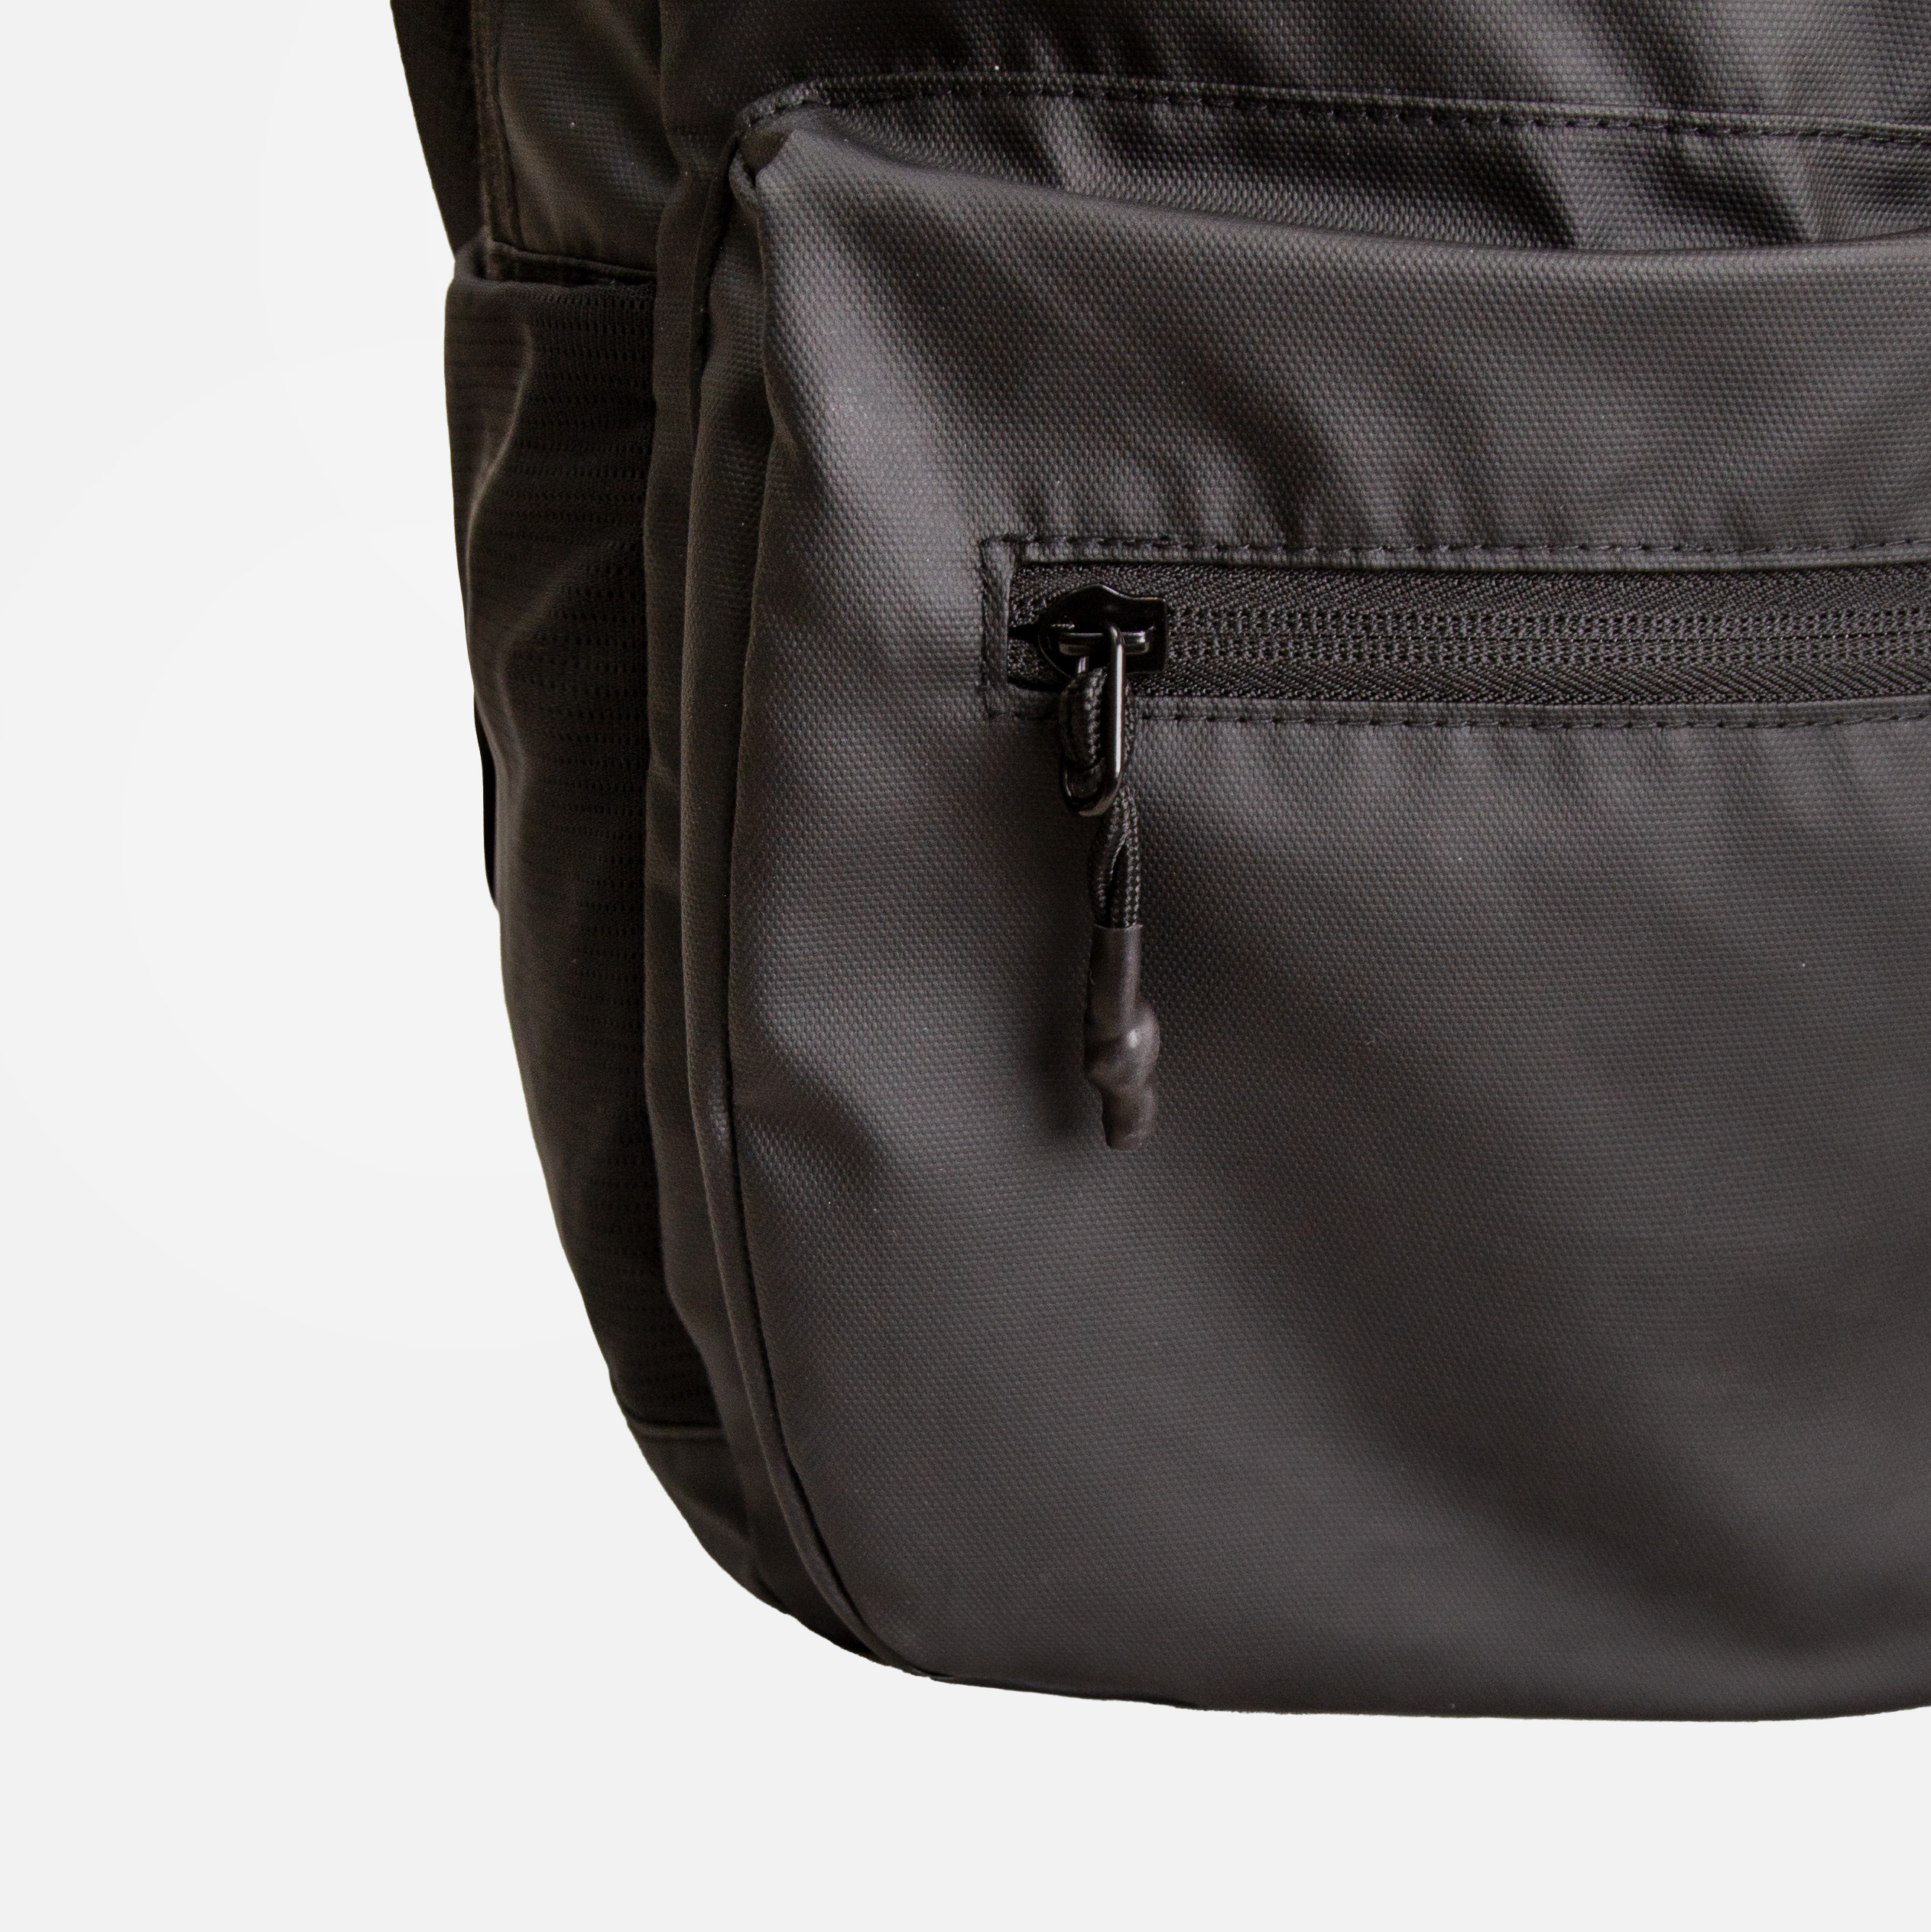 Siesta backpack spotted 🔥📷 @ccbernstein ♥️ »